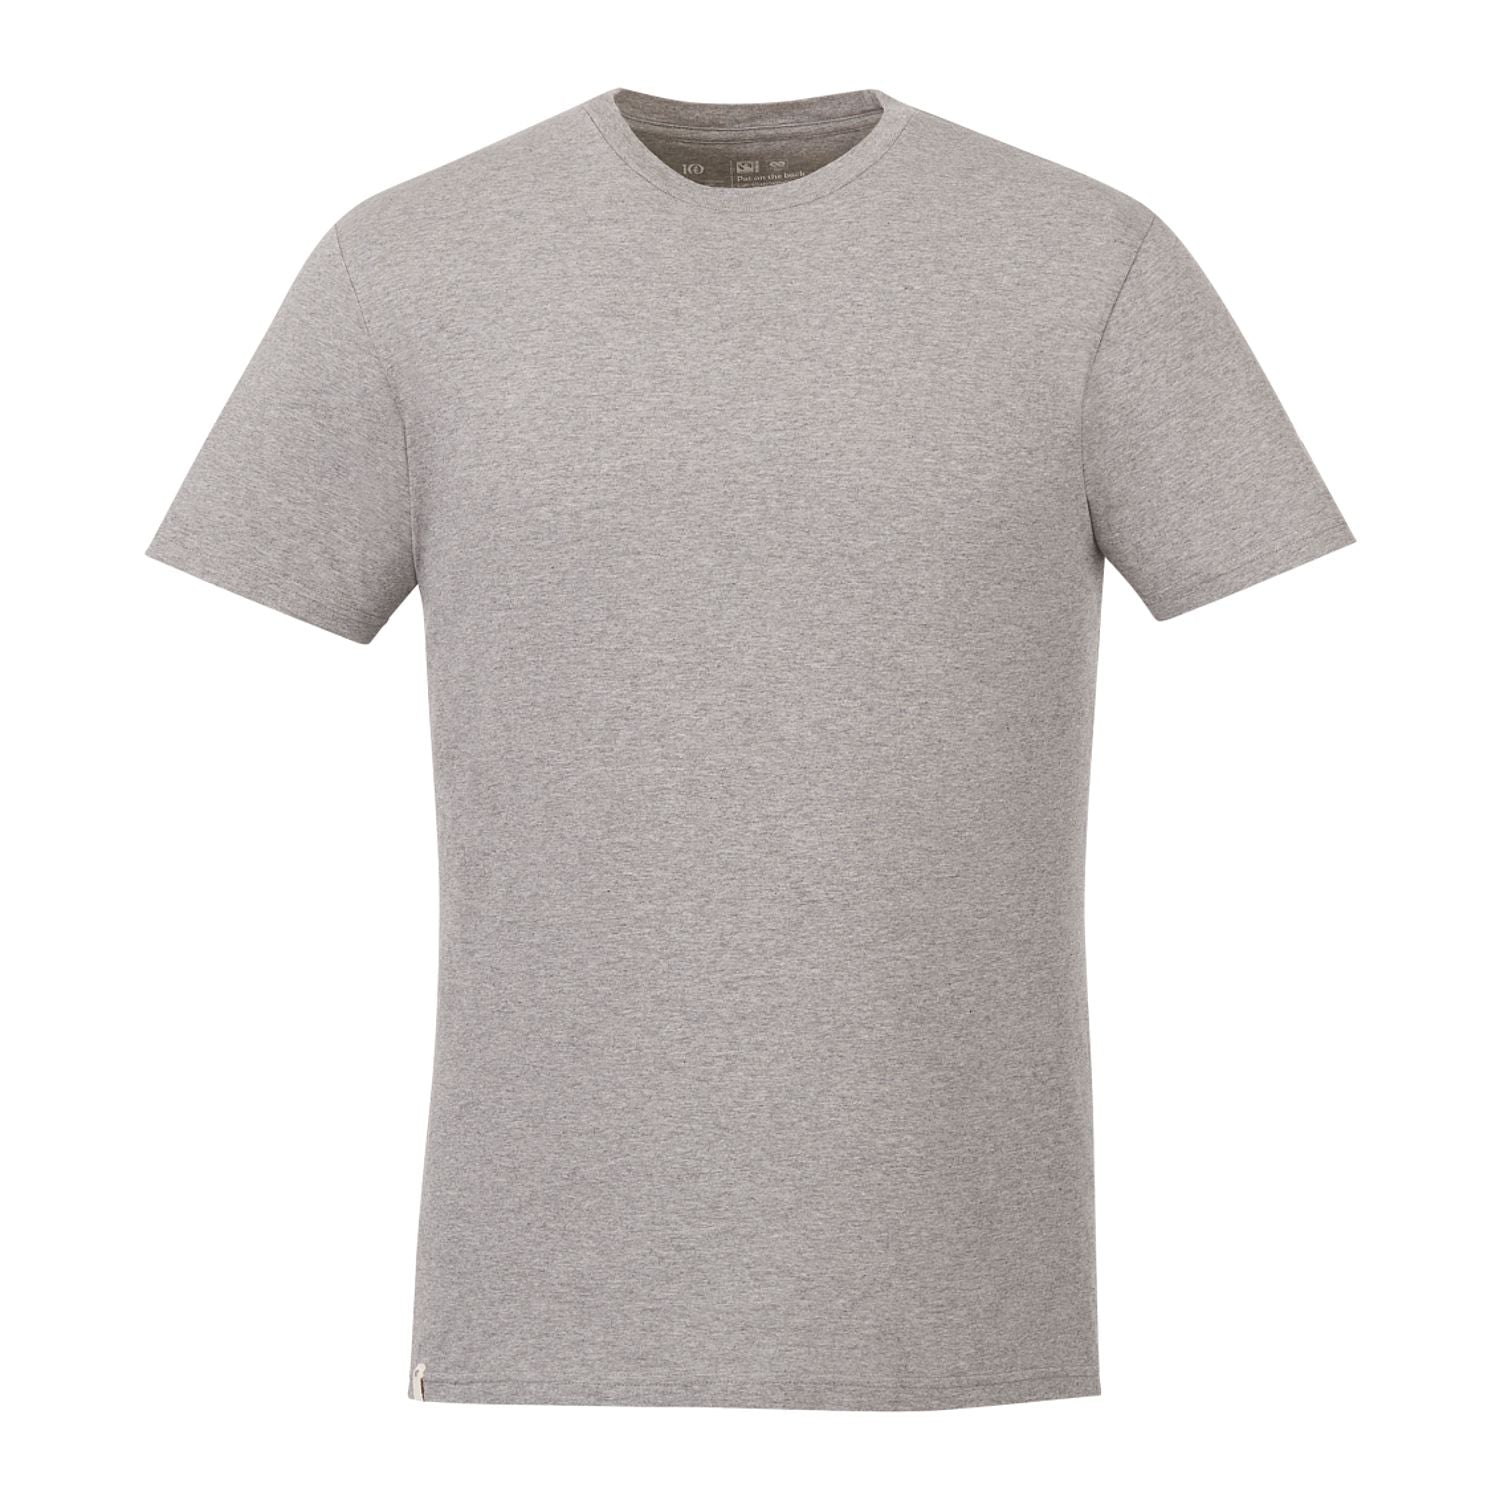 Customizable Tentree men's organic cotton short sleeve tee in heather gray.